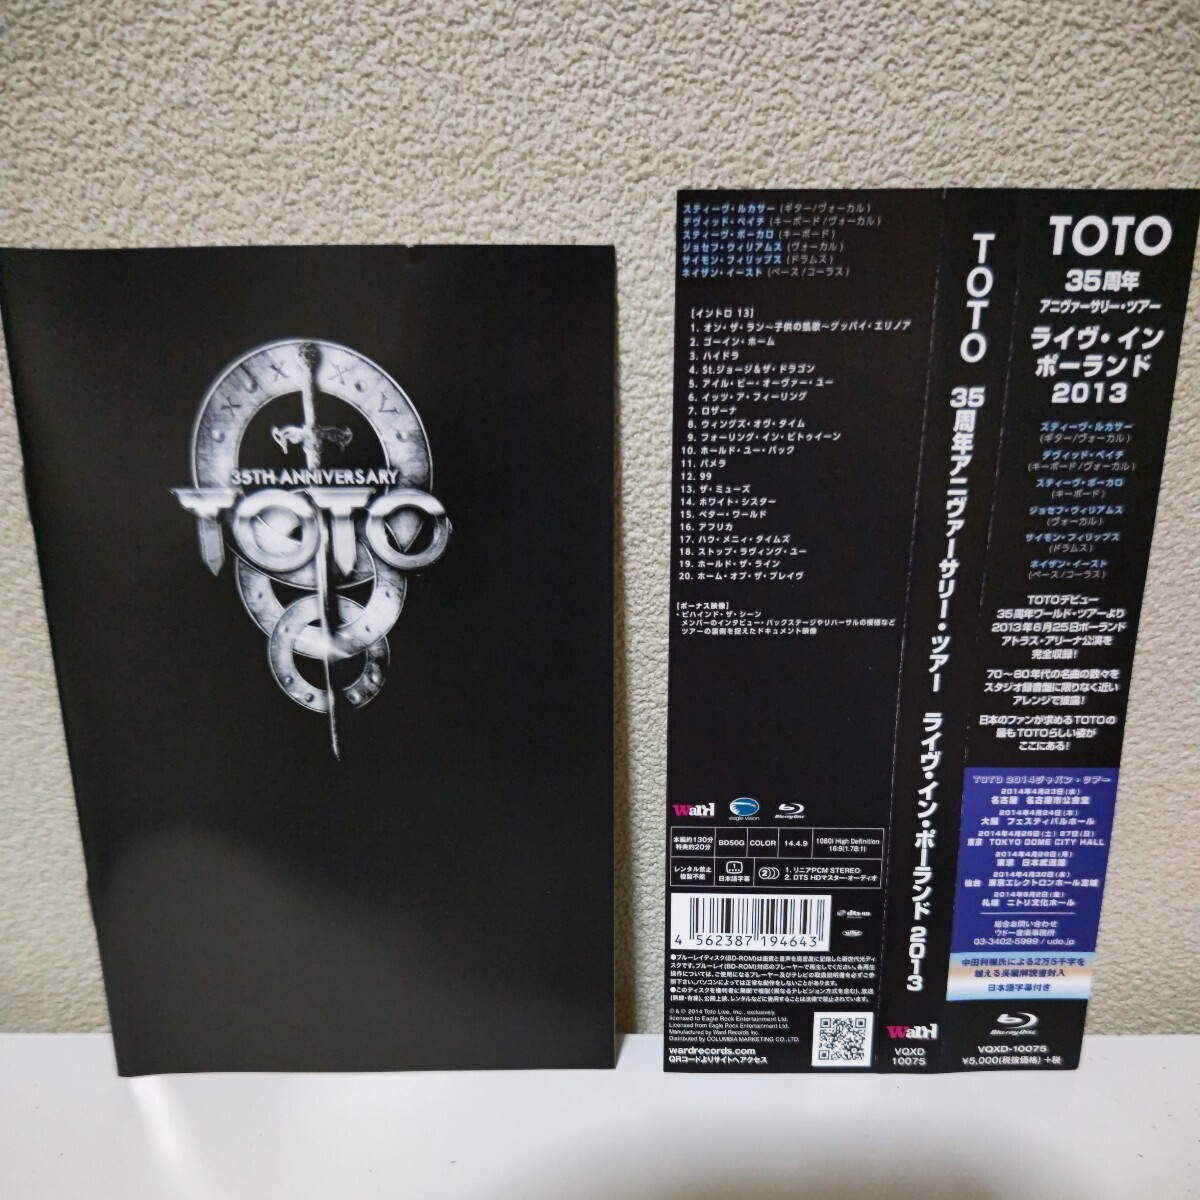 TOTO/ жить * in * Польша 2013 записано в Японии Blu-ray Steve * LUKA волна .sef* Williams nei The n* East etc